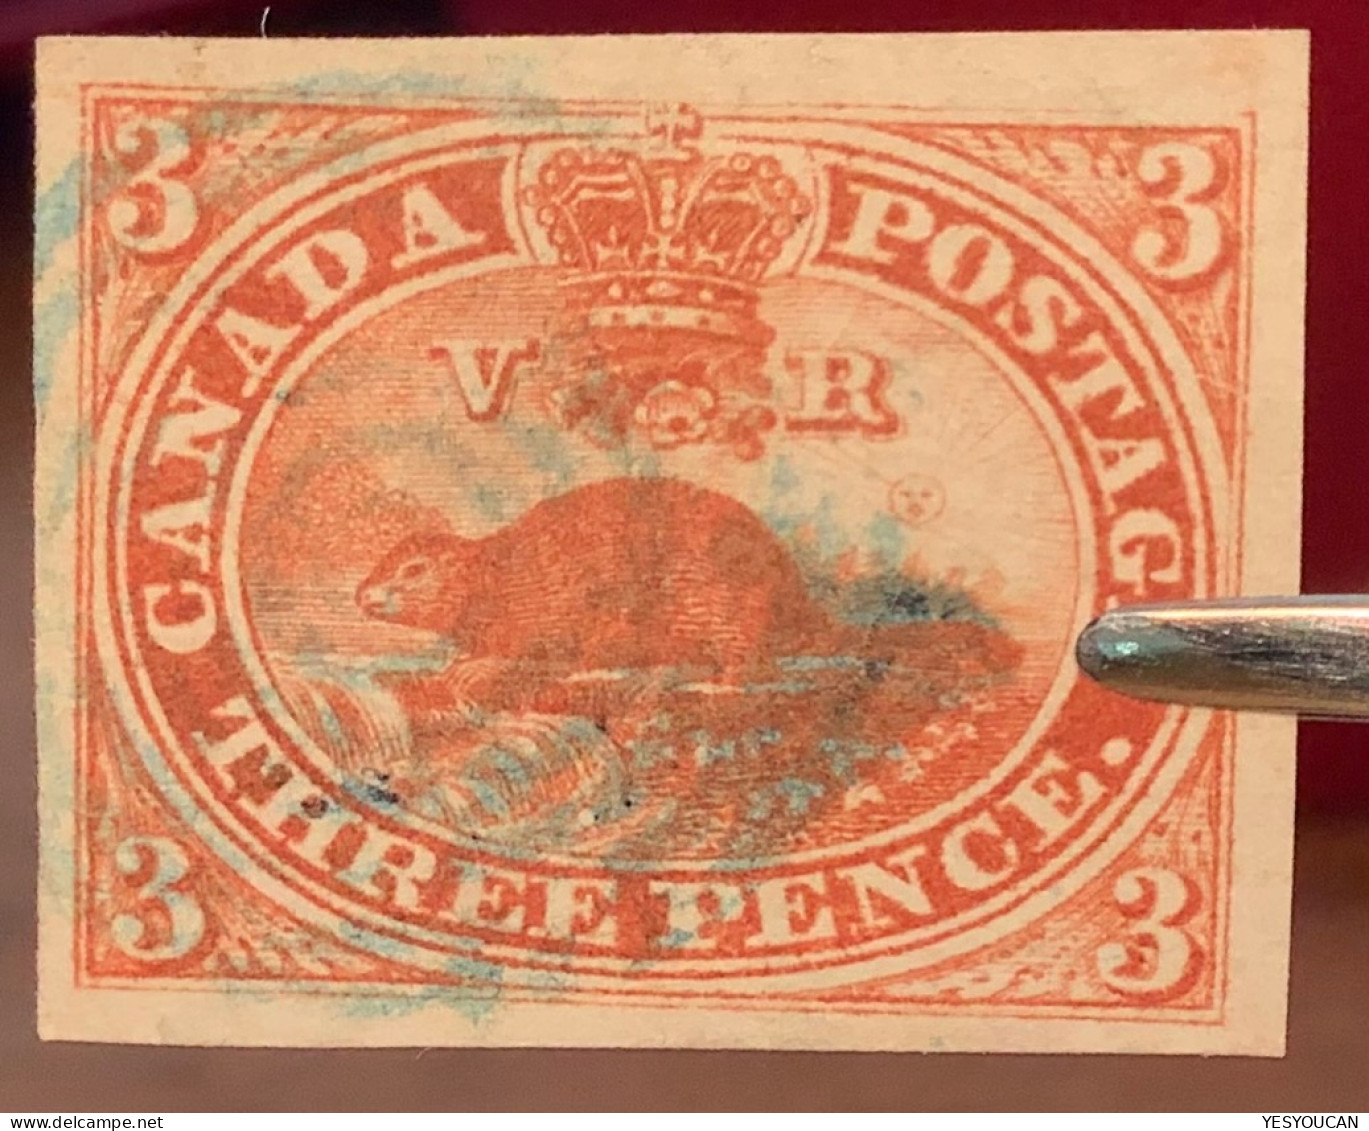 Sc.4ii XF used 1852-57 3d orange red beaver, wove paper, attractive blue pmk  (Canada Y&T5 SUP obl castor/Queen Victoria